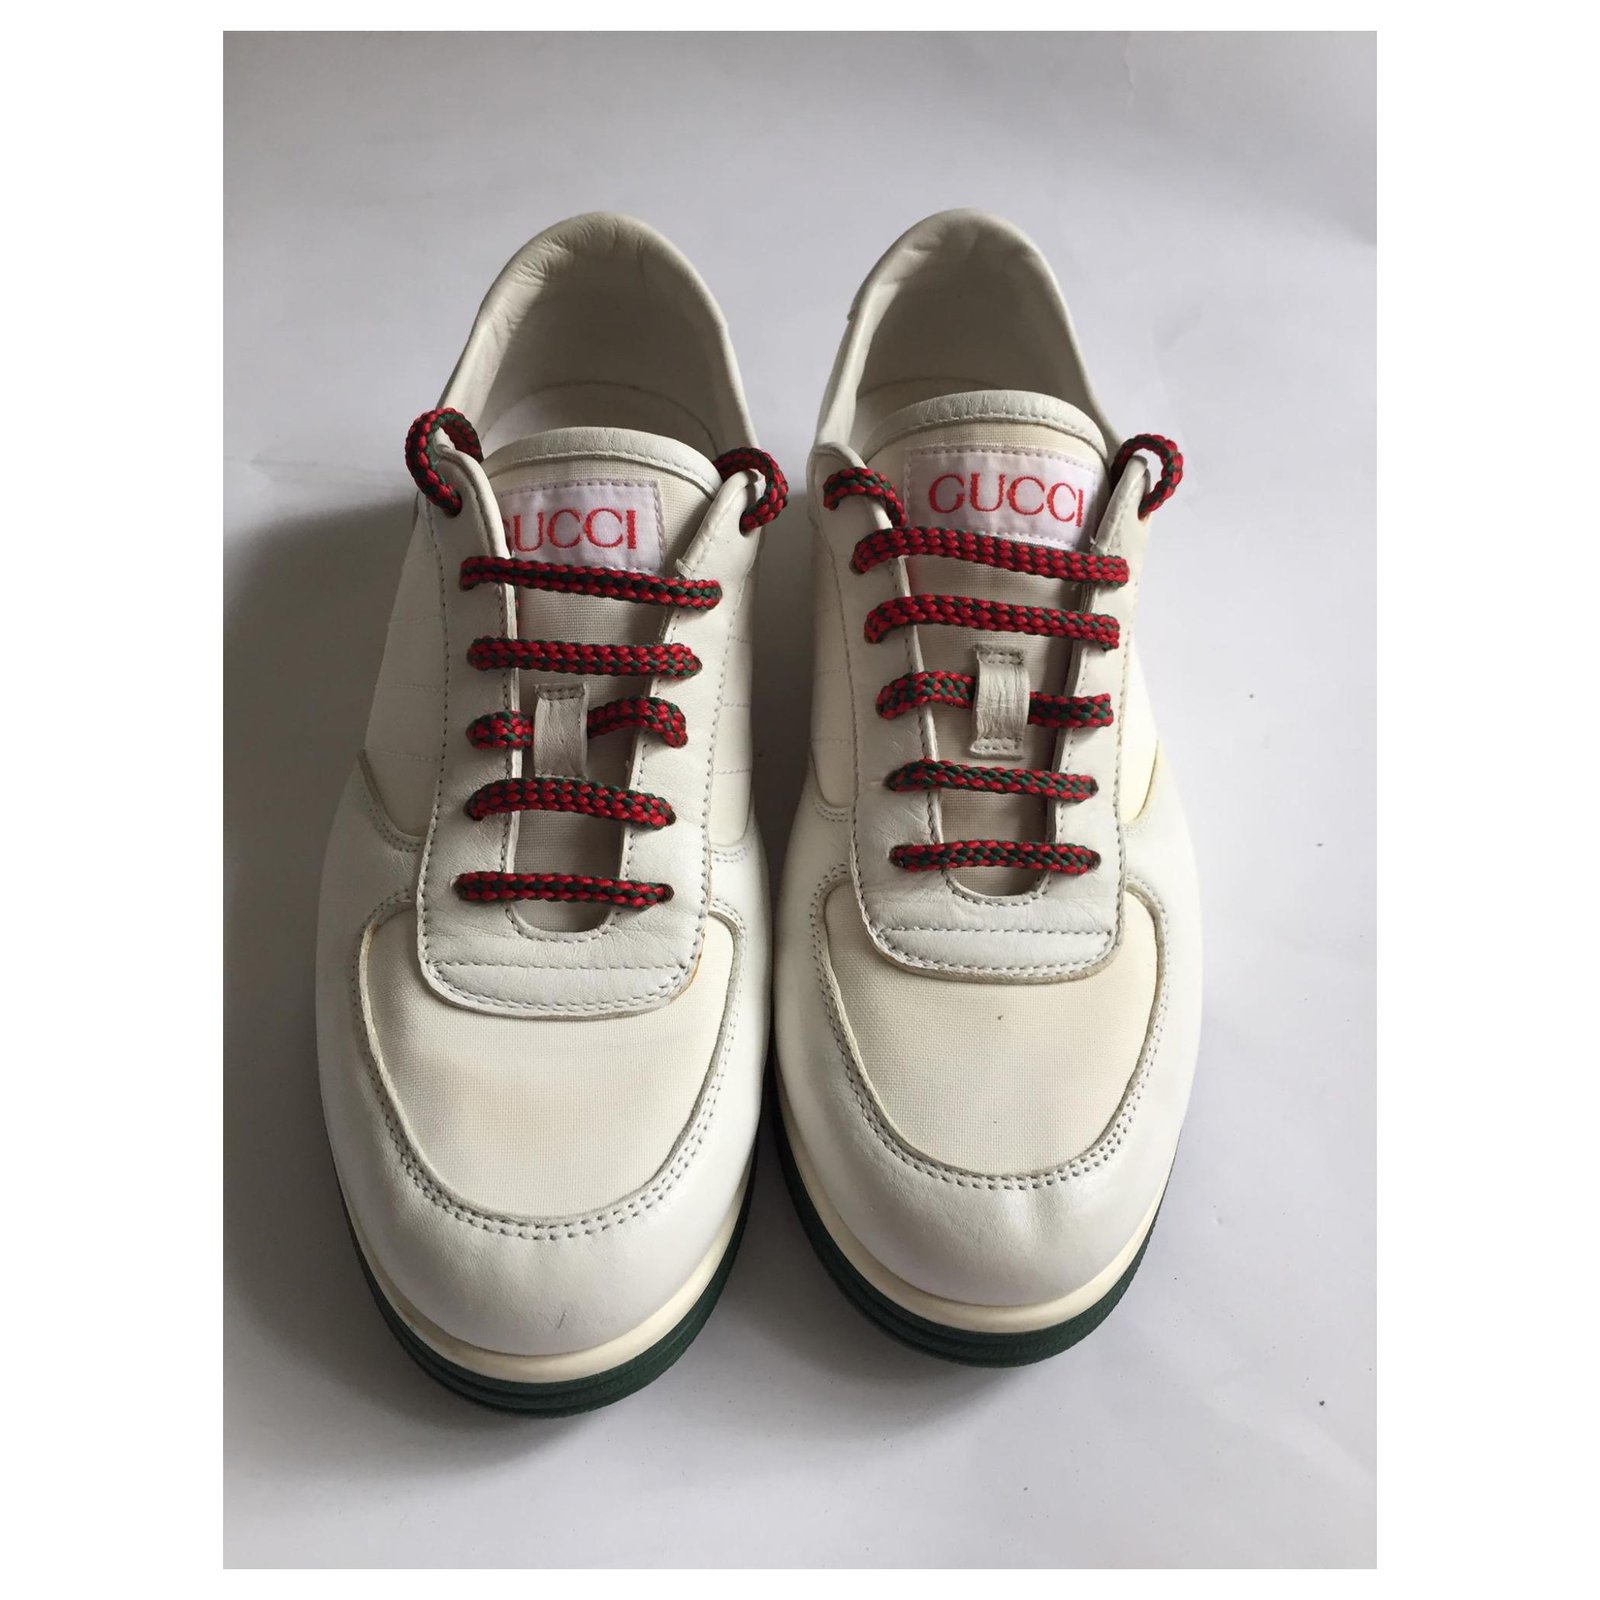 gucci gym shoes 1984